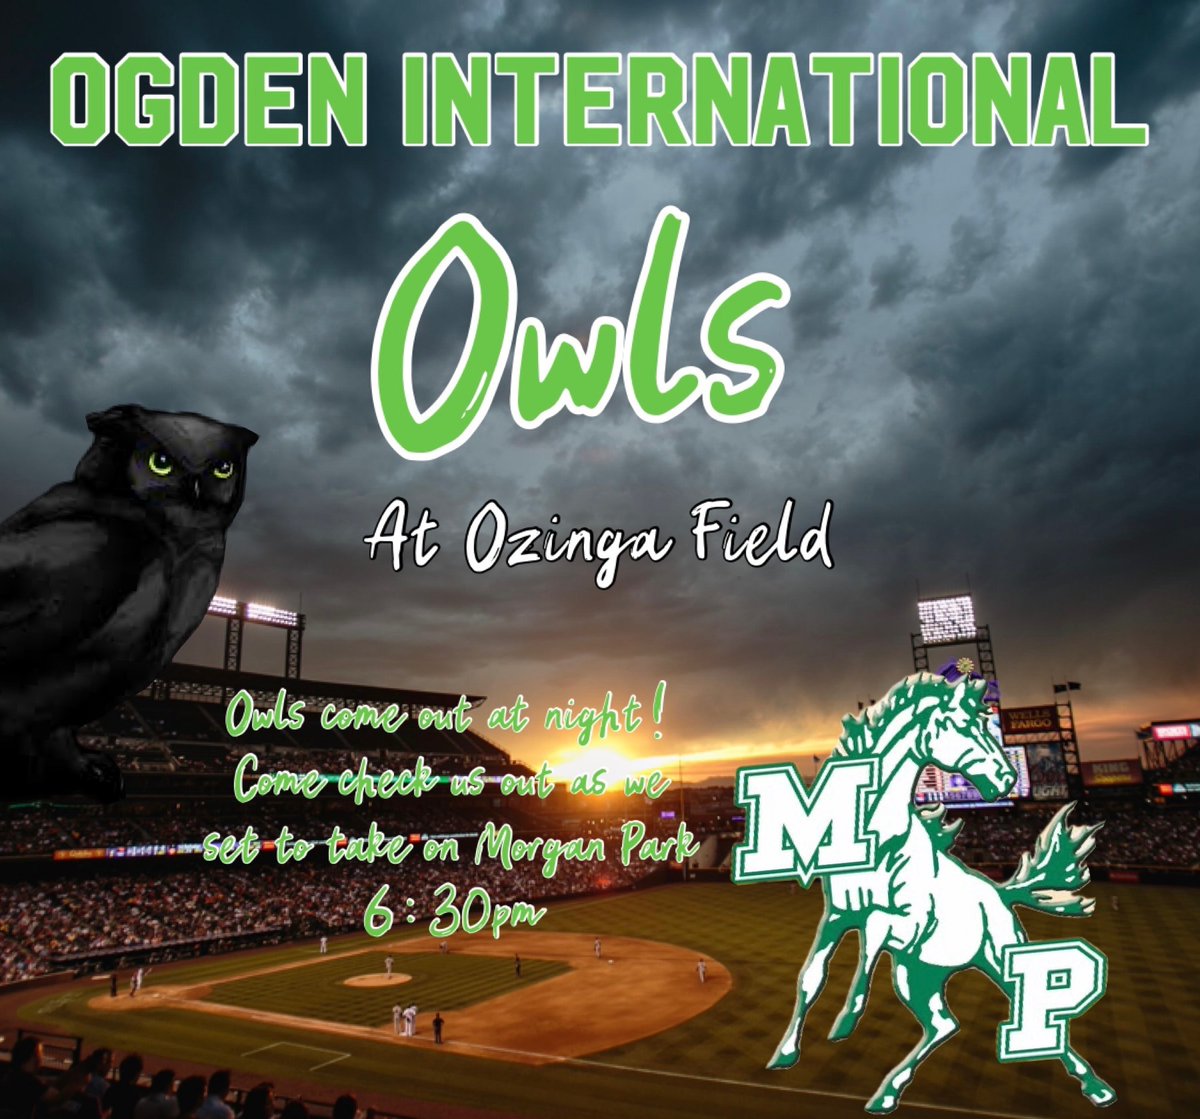 Big Game Tomorrow night 6:30PM at Ozinga Ogden VS MP #OgdenOwlsBaseball